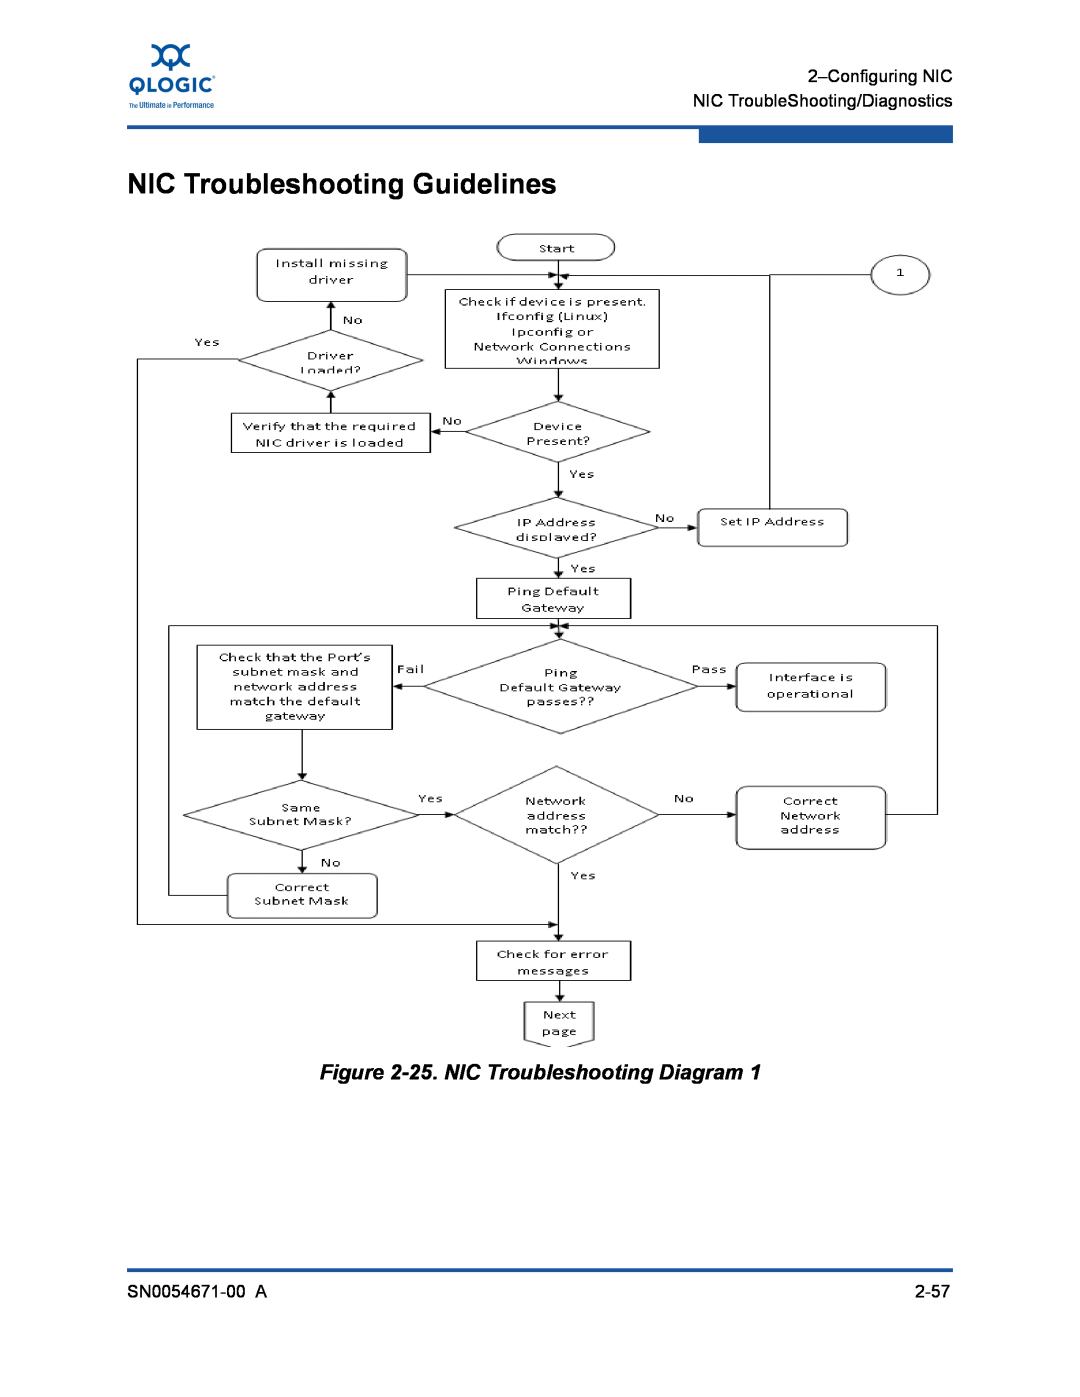 Q-Logic 3200, 8200 manual NIC Troubleshooting Guidelines, 25. NIC Troubleshooting Diagram 